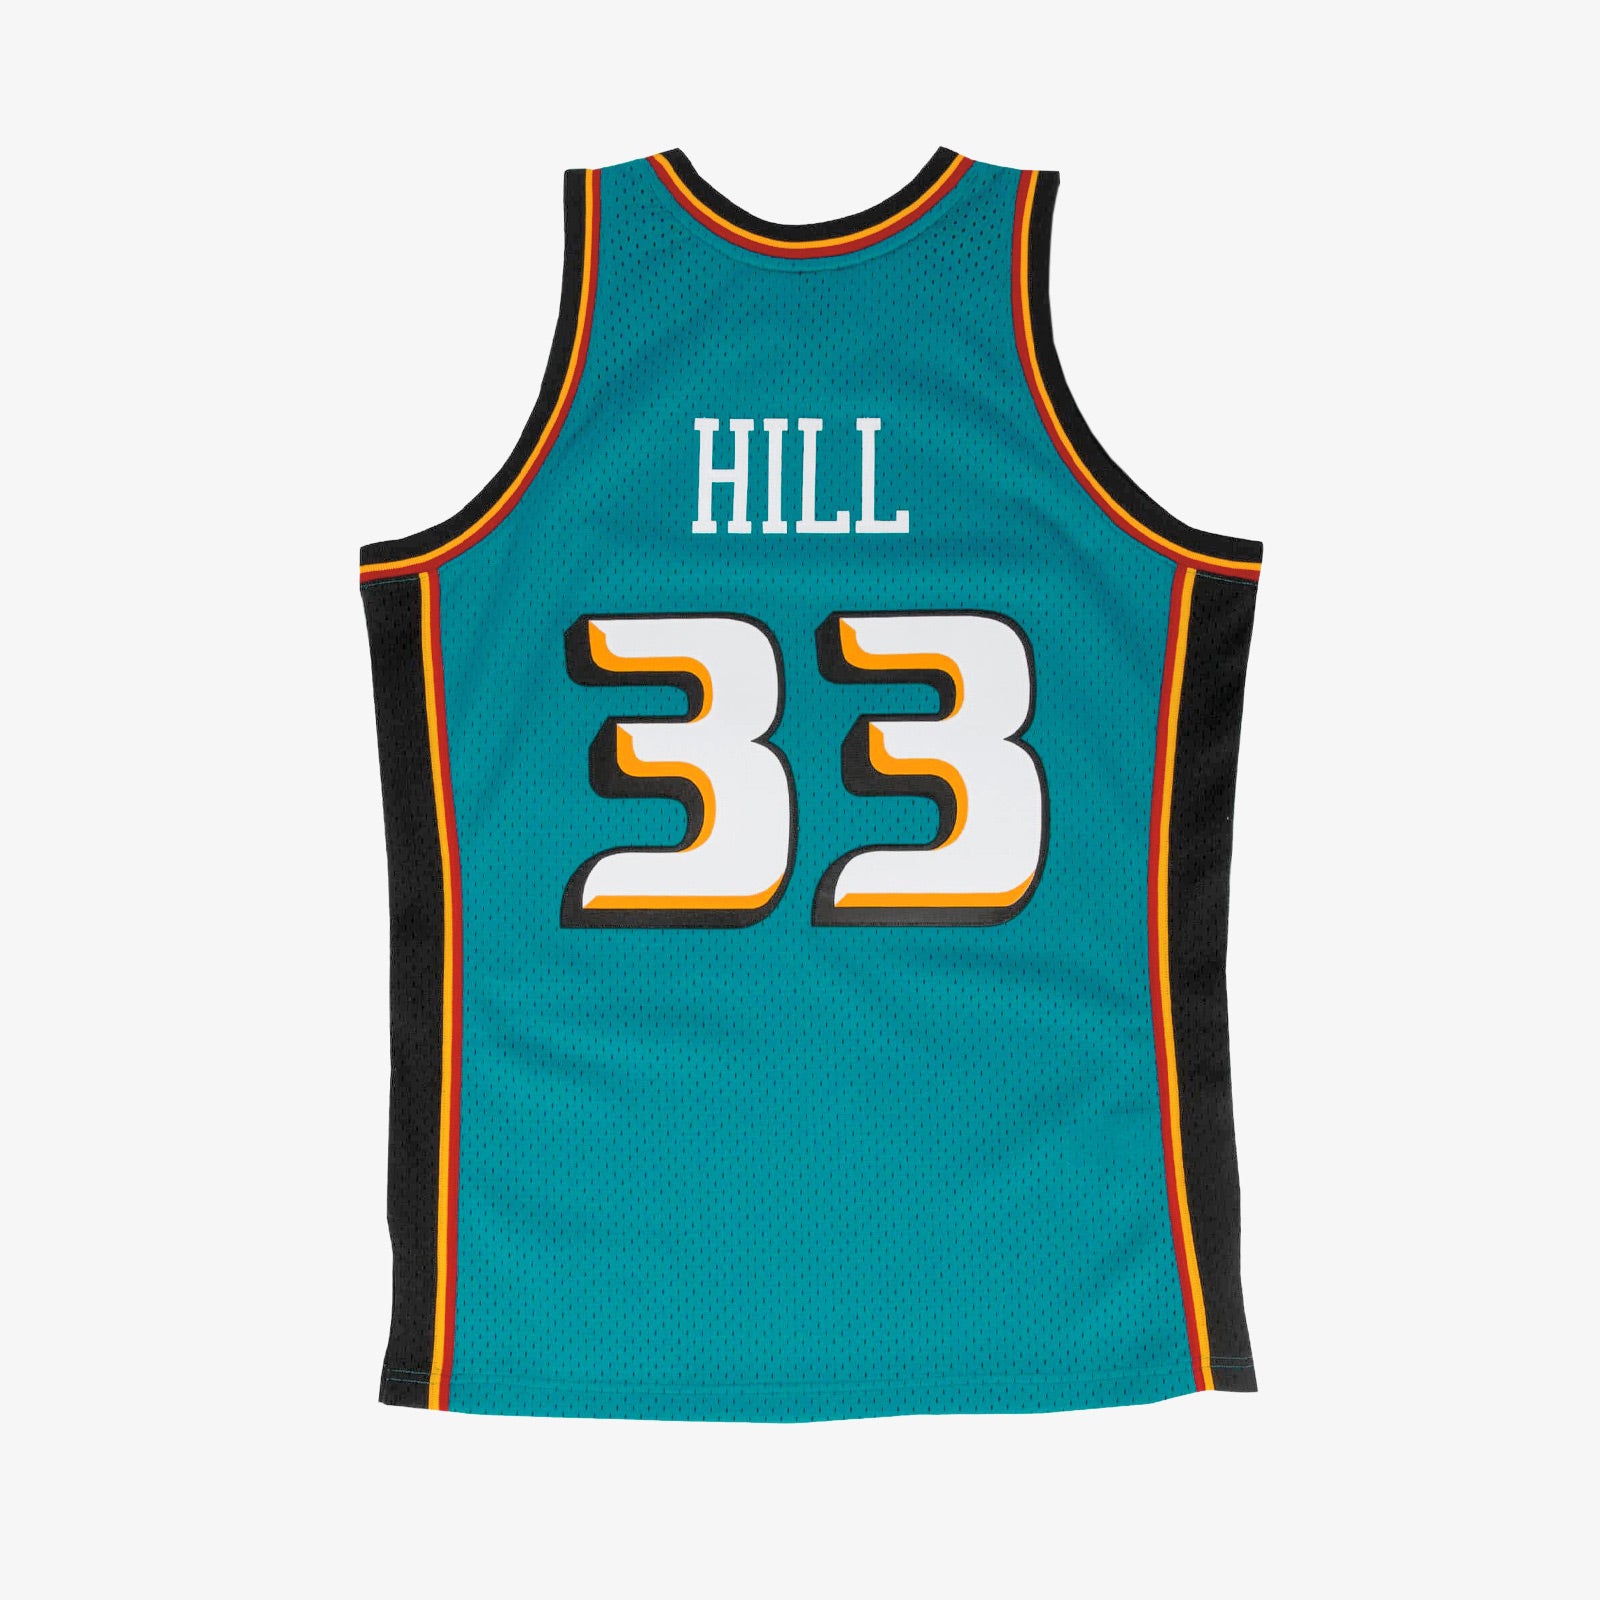 Grant Hill 33 Detroit Pistons Throwback Hardwood Teal Jersey - Jerseys2021